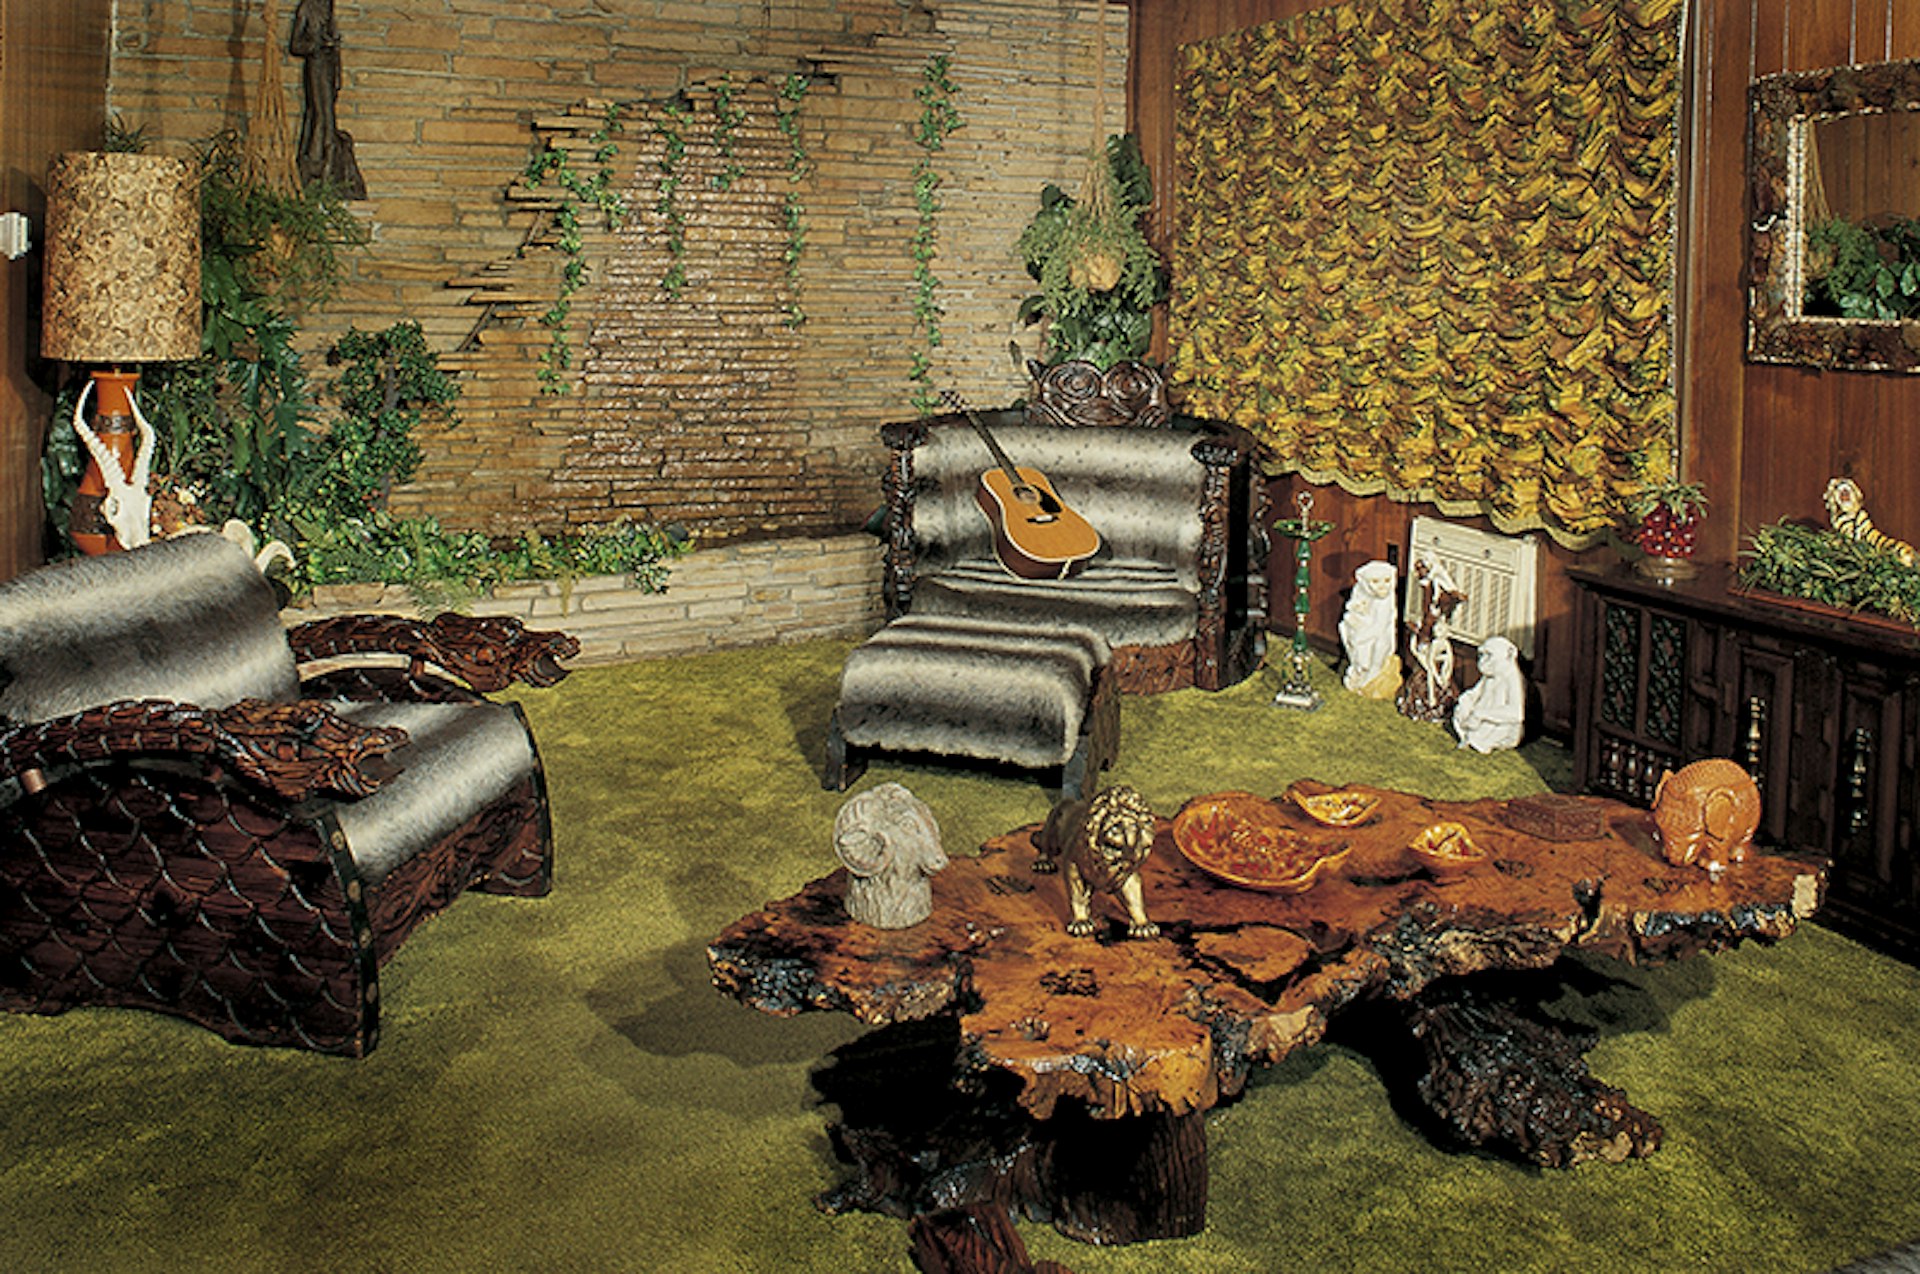 The Jungle Room at Graceland.  